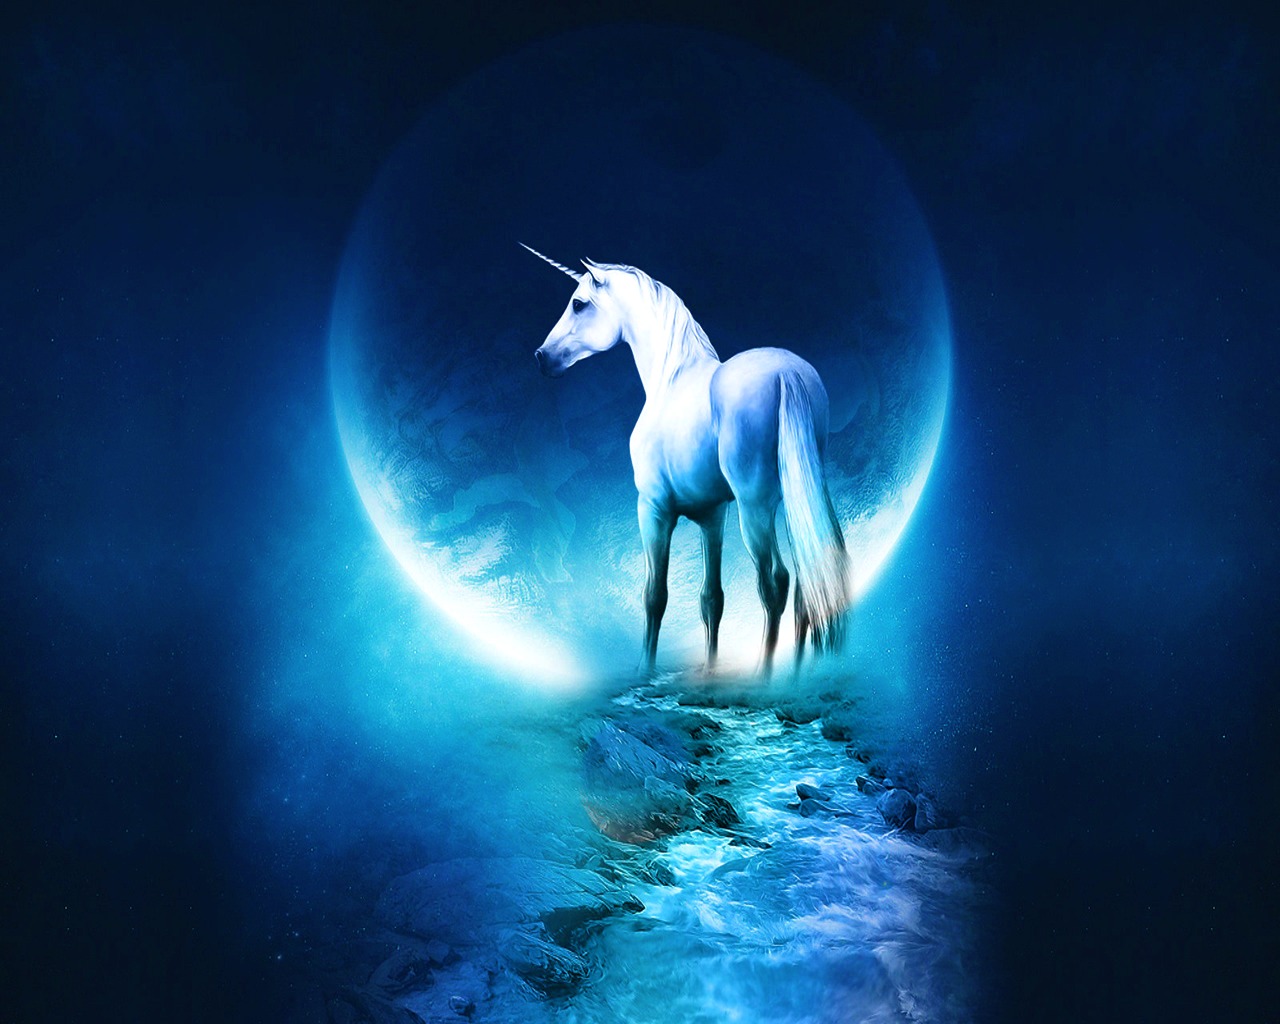 Fantasy images Unicorn wallpaper photos 31301602